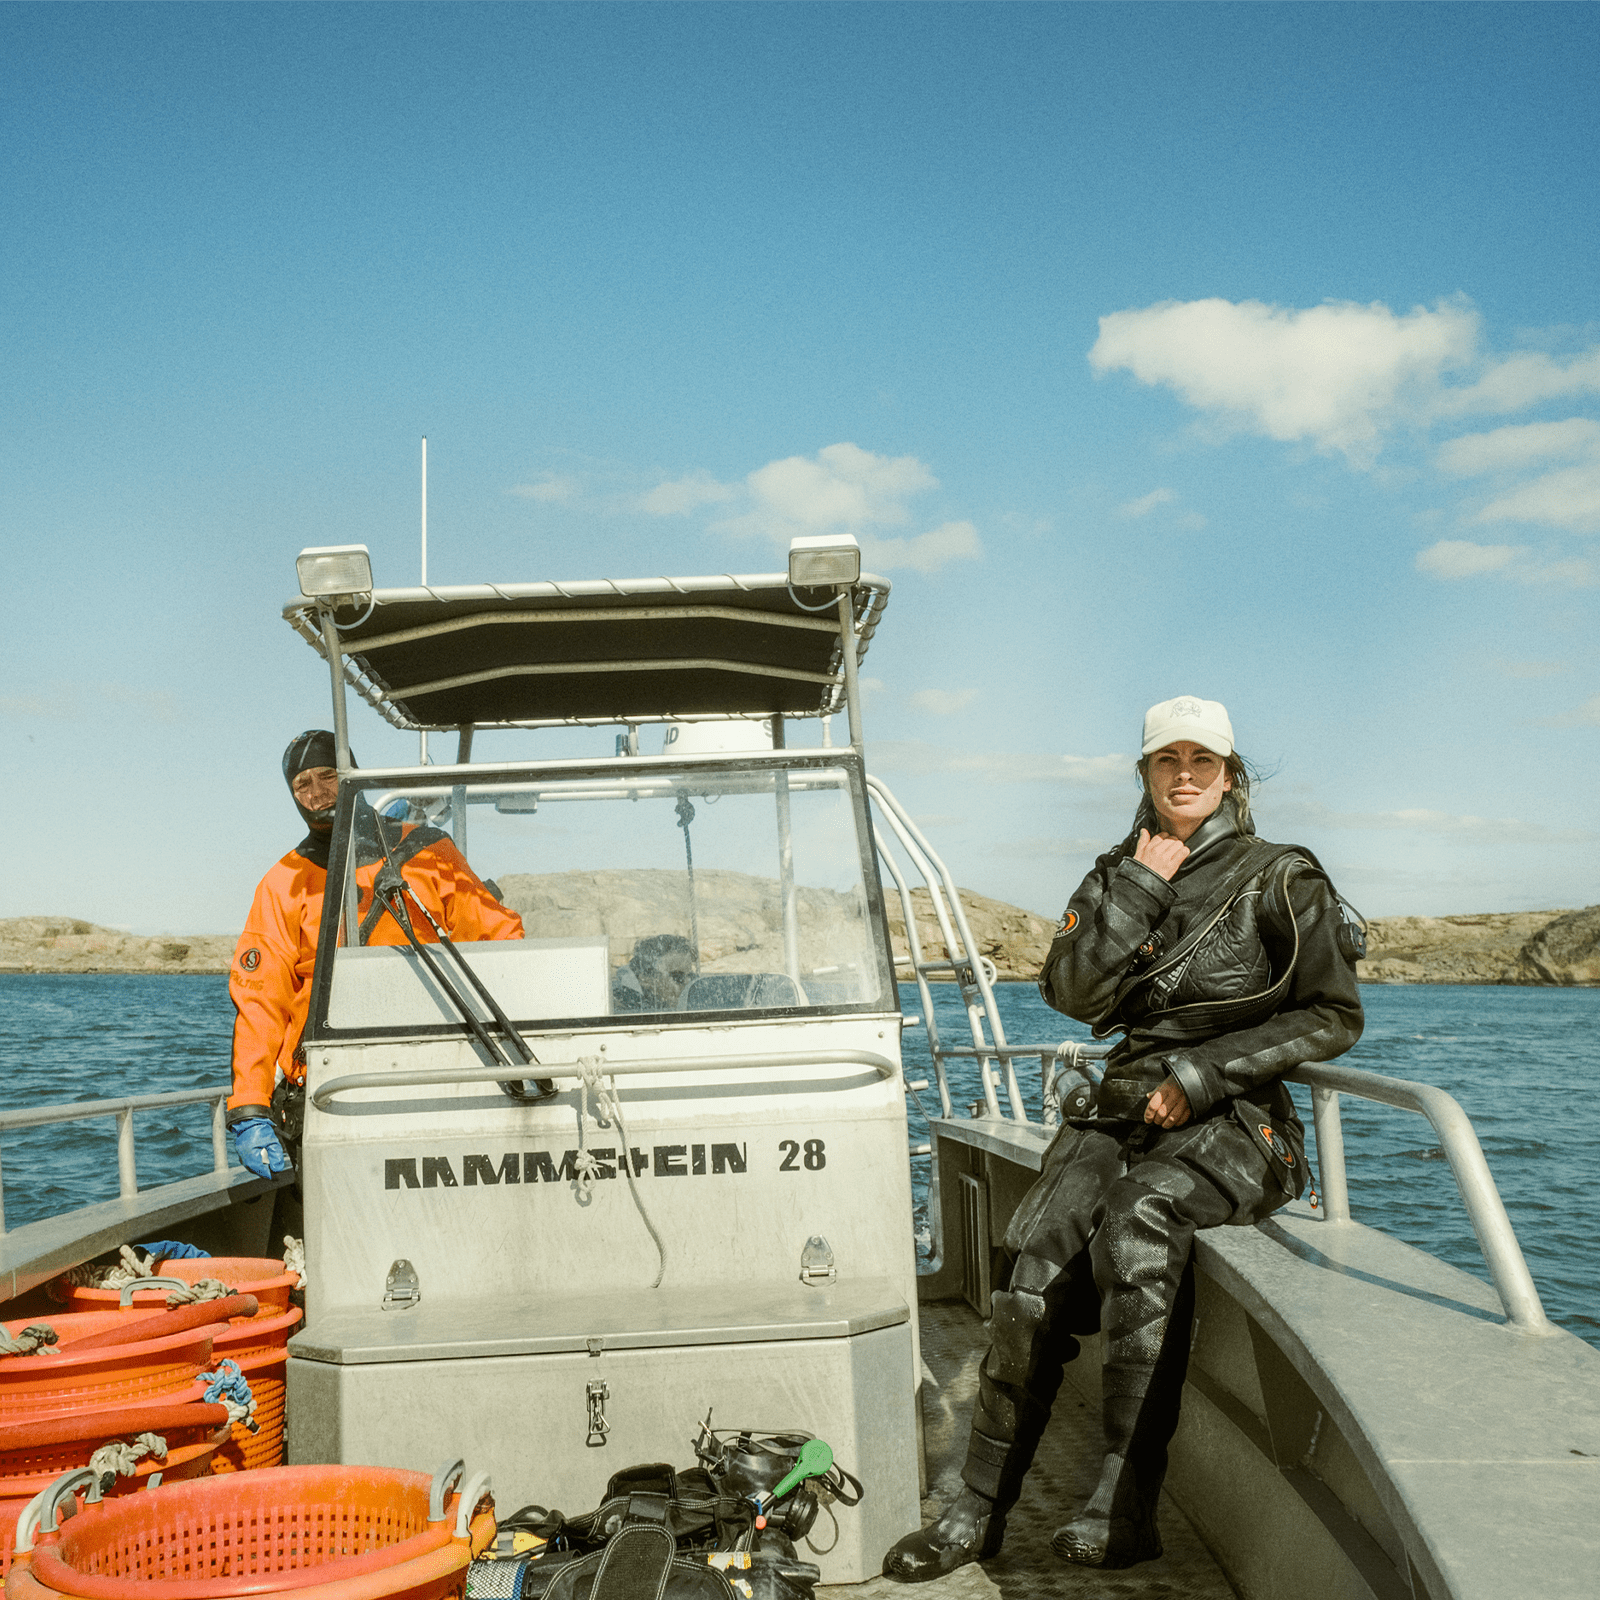 Lotta Klemming:瑞典女牡蛎潜水员 